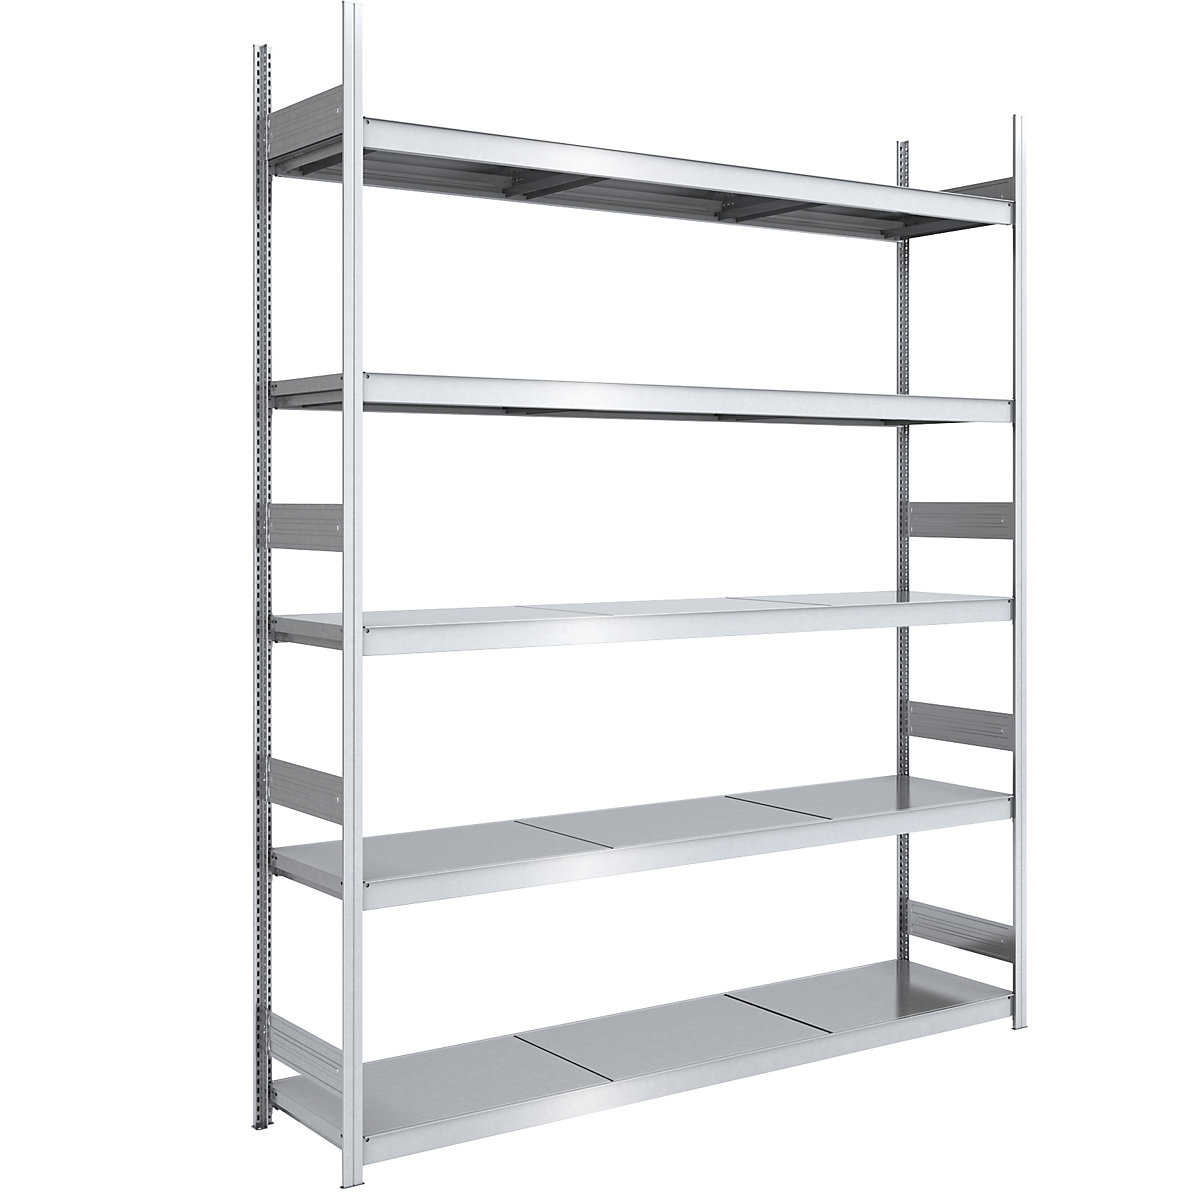 Wide span boltless shelving unit, zinc plated – hofe, shelf WxD 2250 x 600 mm, standard shelf unit, 5 steel shelves, height 3000 mm